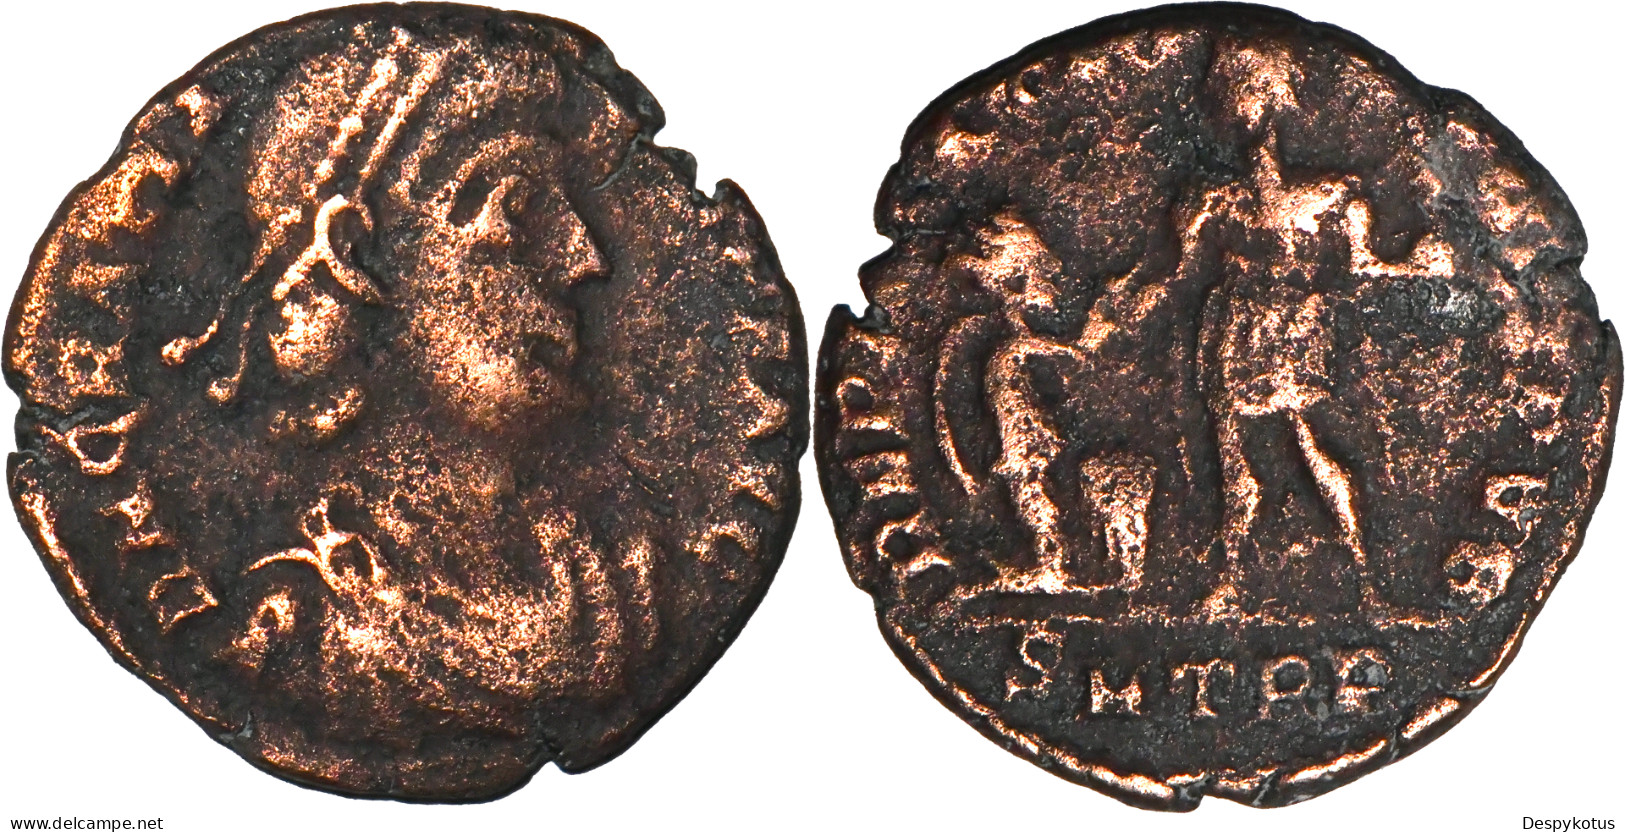 ROME - Maiorina Pecunia - GRATIEN - REPARATION REIPVB - 378-383 AD - Trèves (SMTRP) - TRES RARE - 19-199 - El Bajo Imperio Romano (363 / 476)